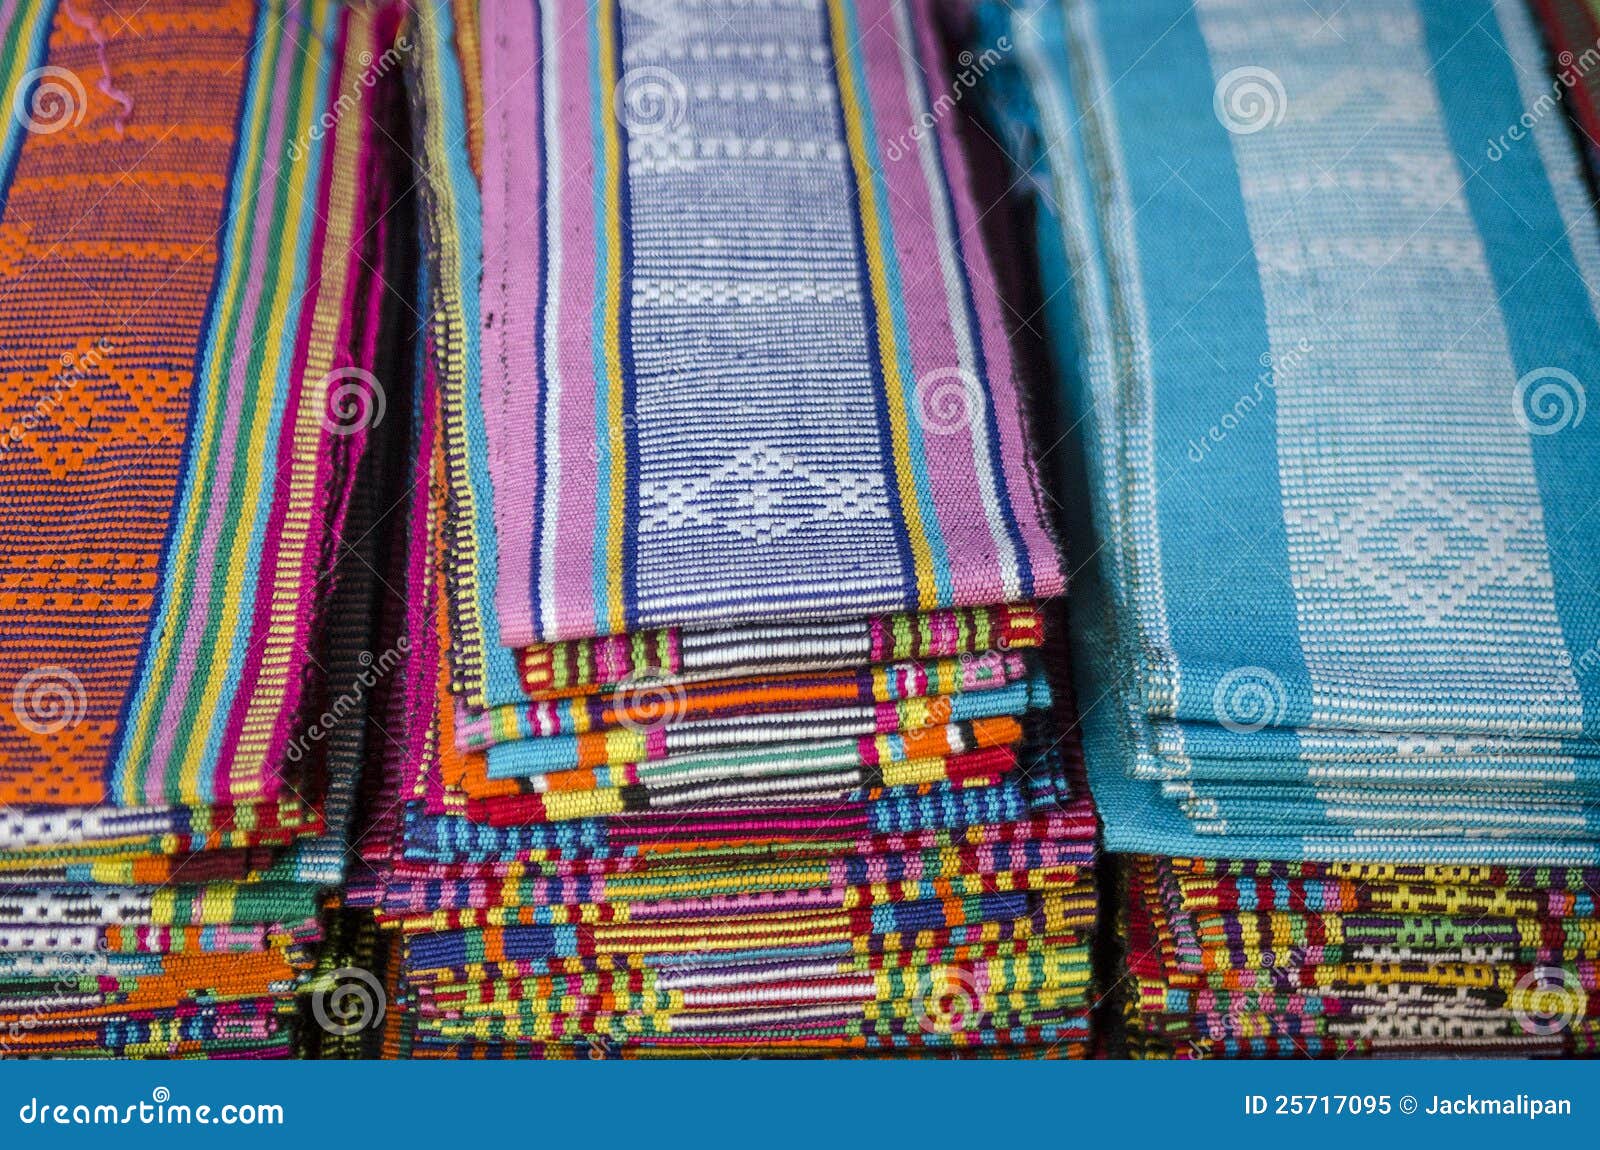 tais fabric in dili east timor, timor leste